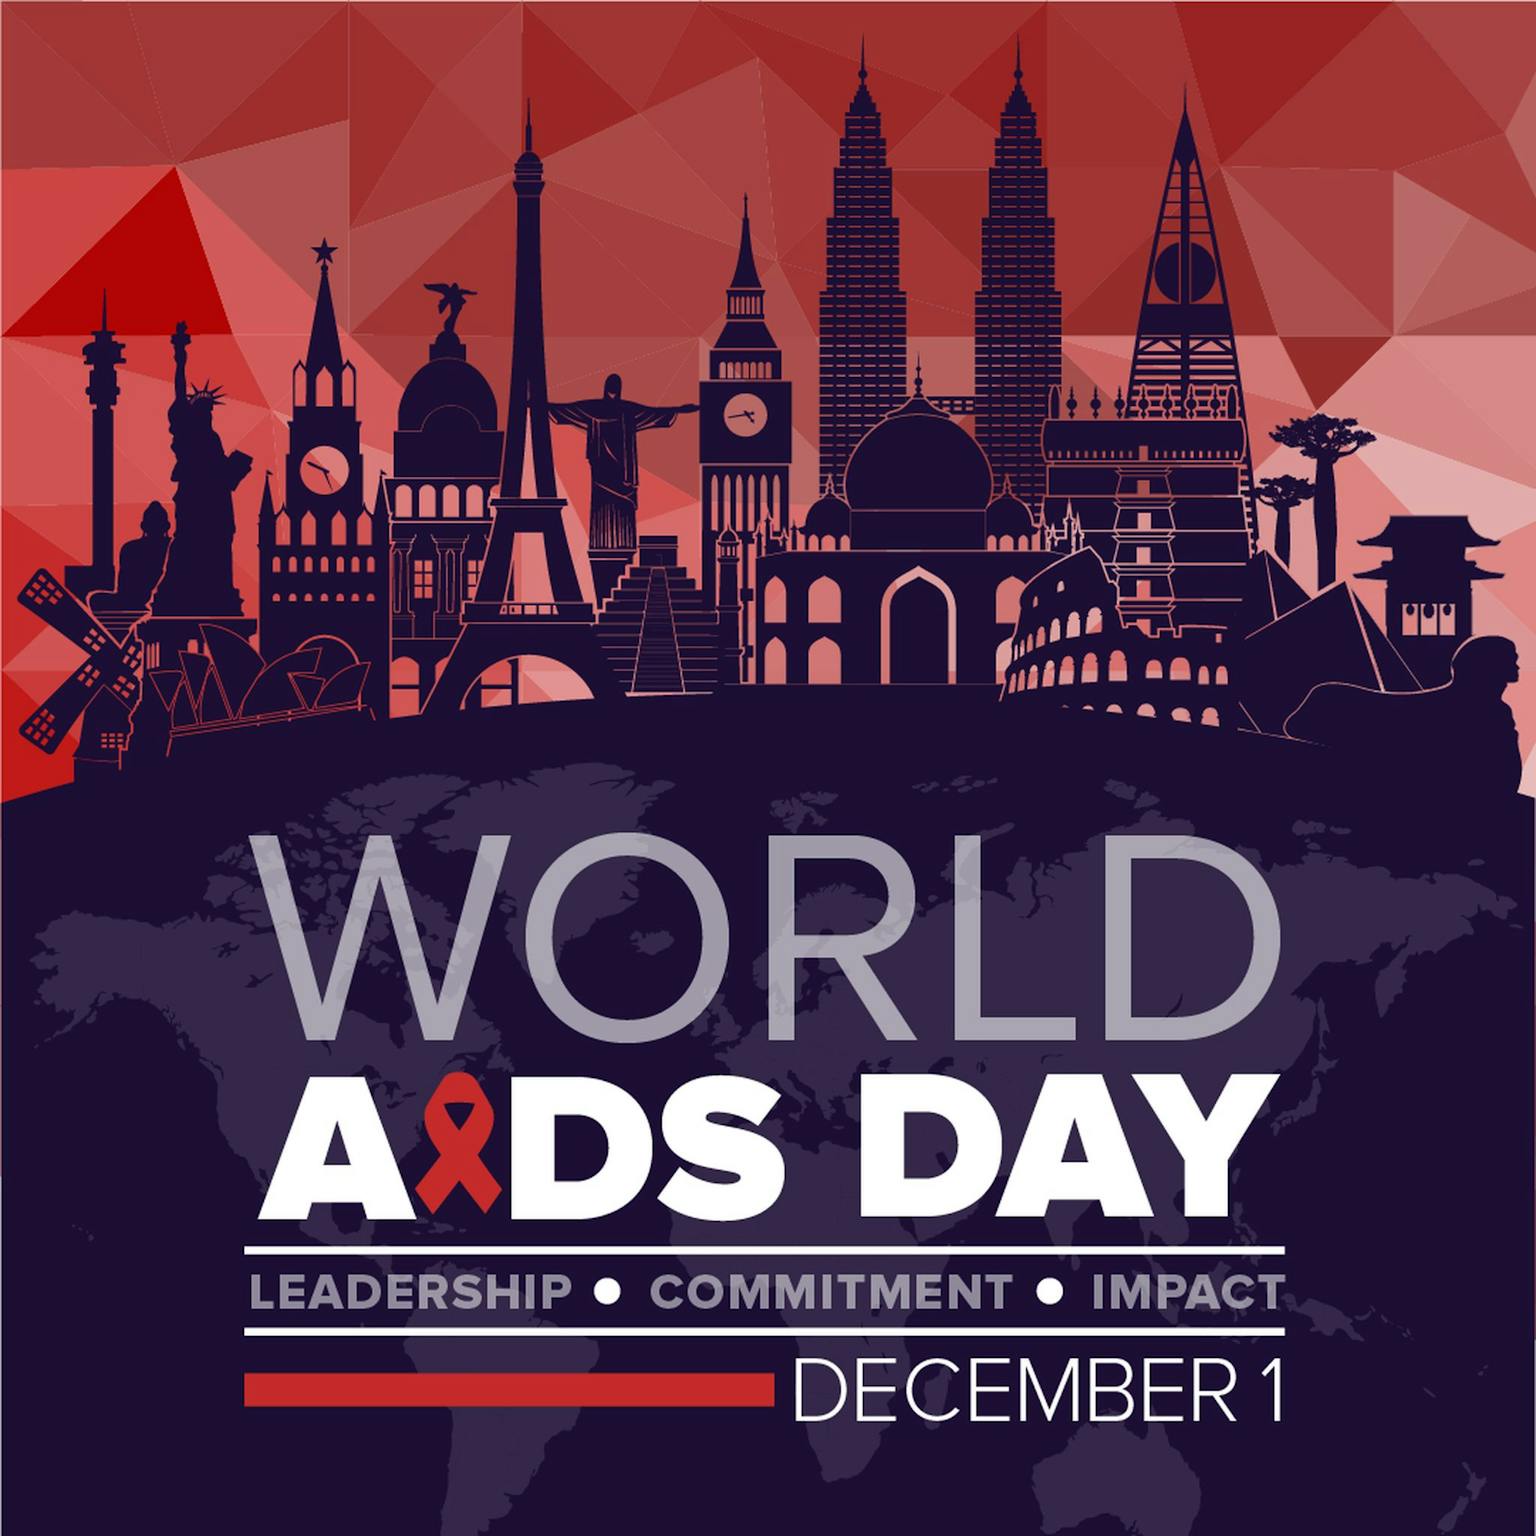 5 Ways to Raise Awareness on World AIDS Day